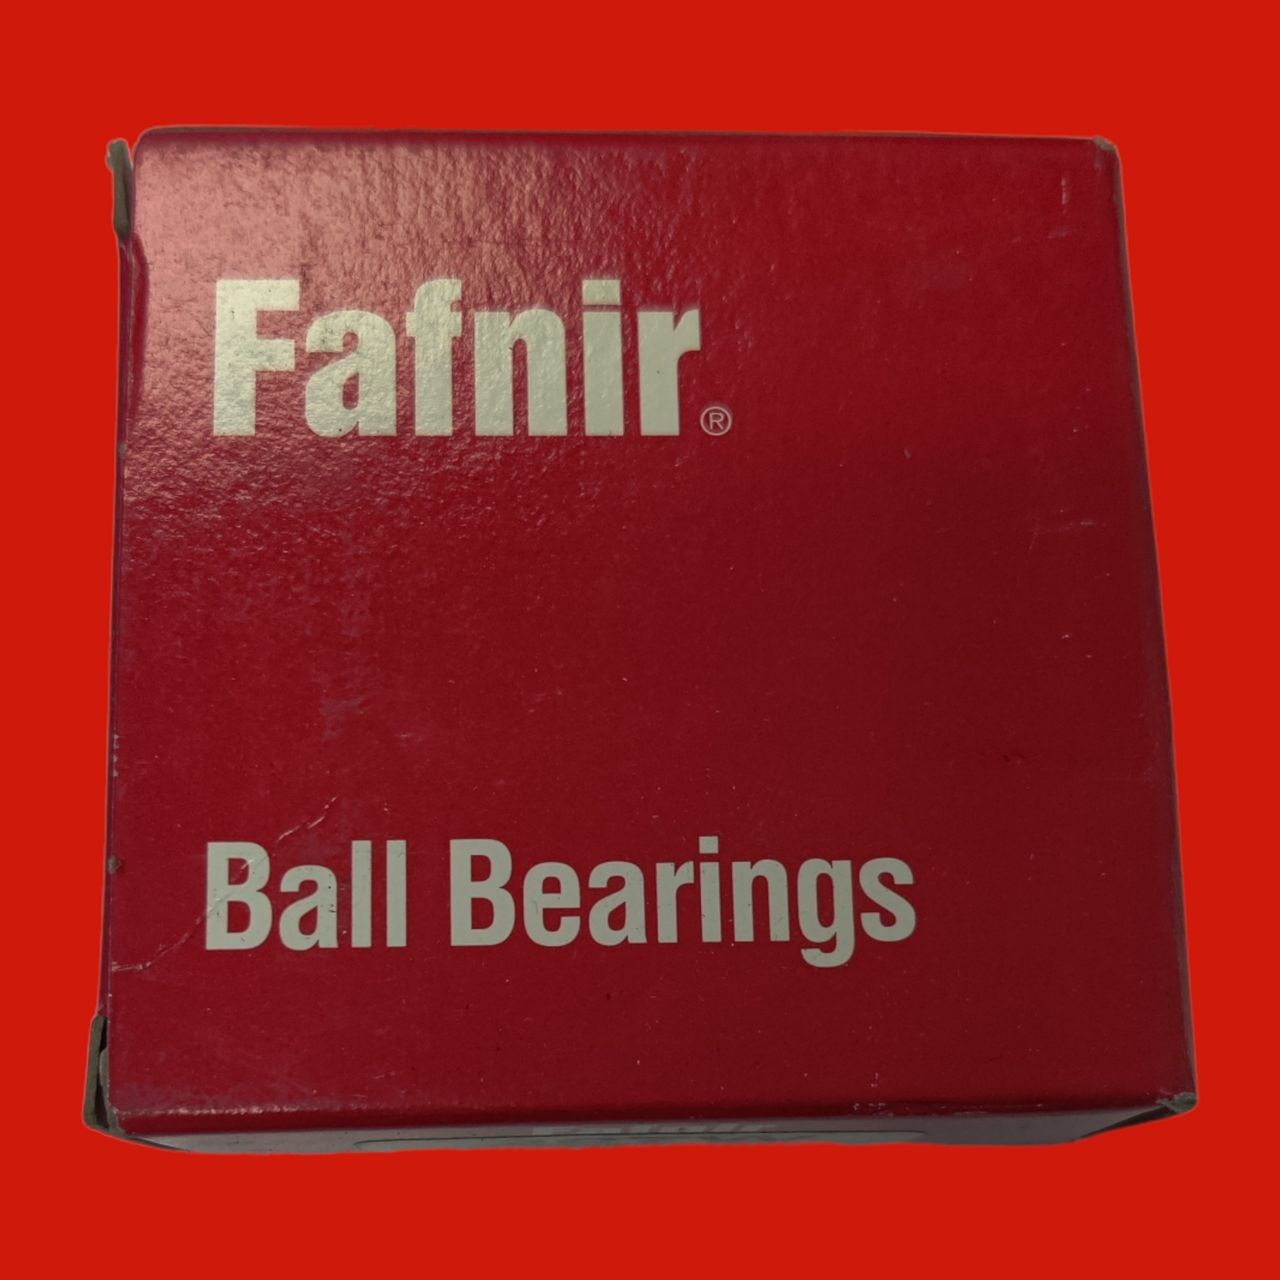 Fafnir 207W Radial/Deep Groove Ball Bearing